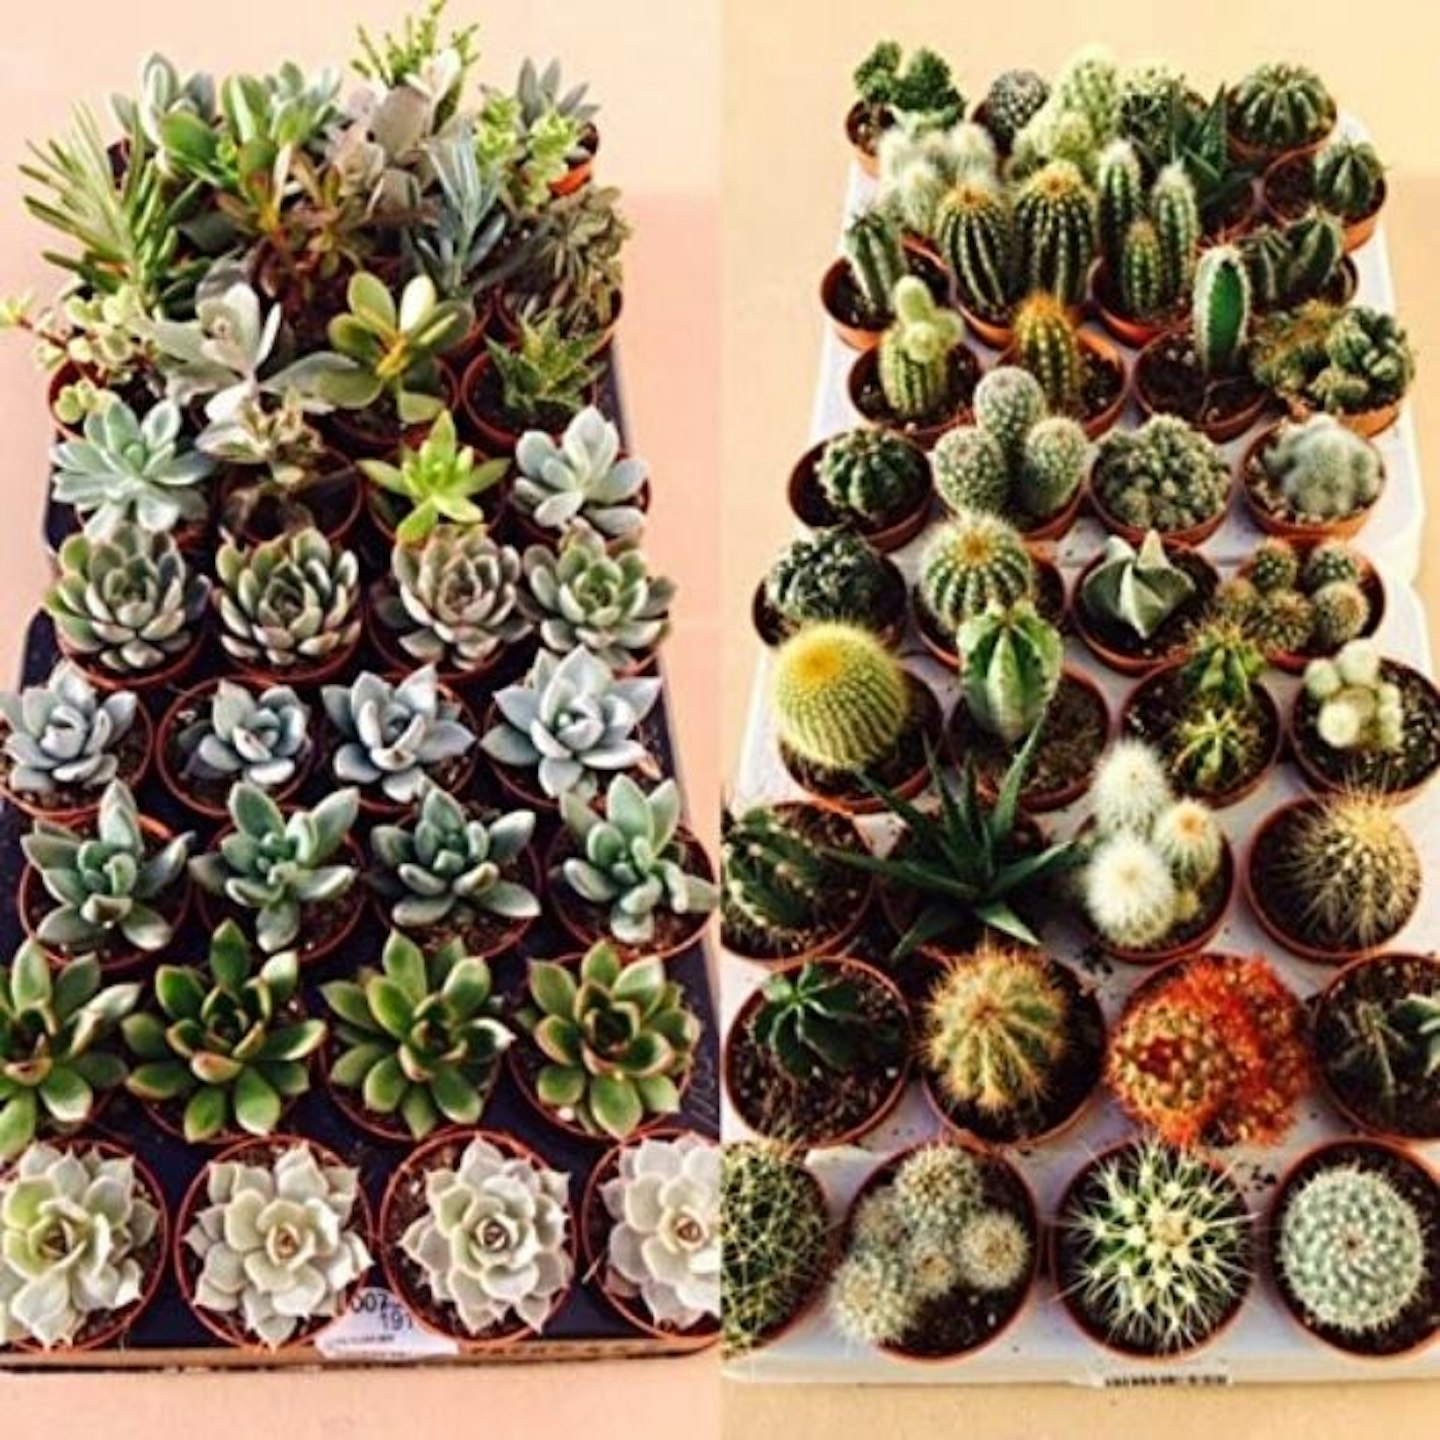 Succulent and Cactus Plant Mix